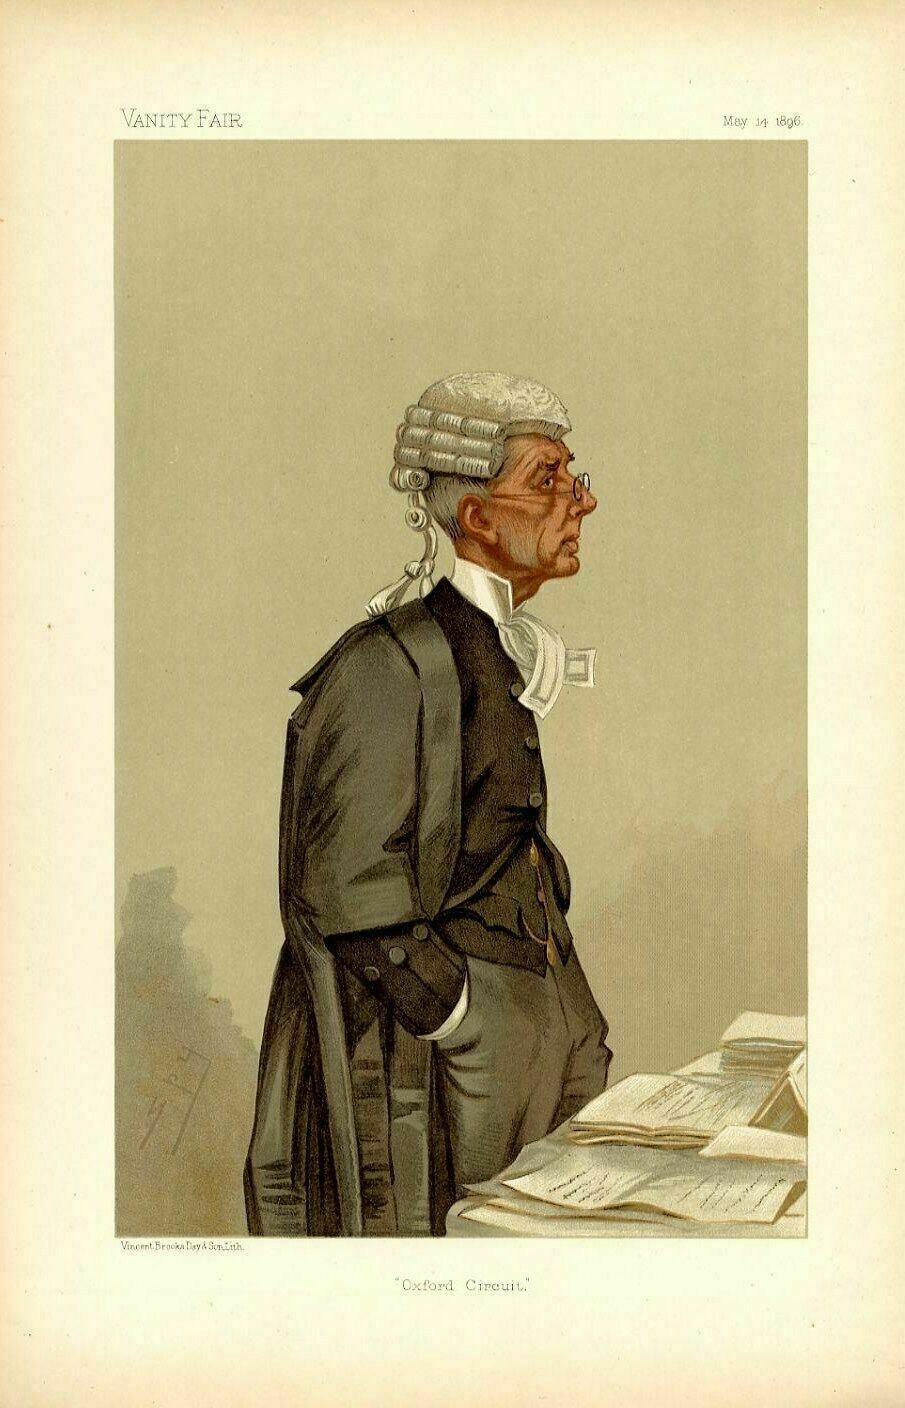 JUDGE BARRISTER QUEEN'S COUNSEL ARTHUR RICHARD JELF OXFORD CIRCUIT BENCHER JUDGE